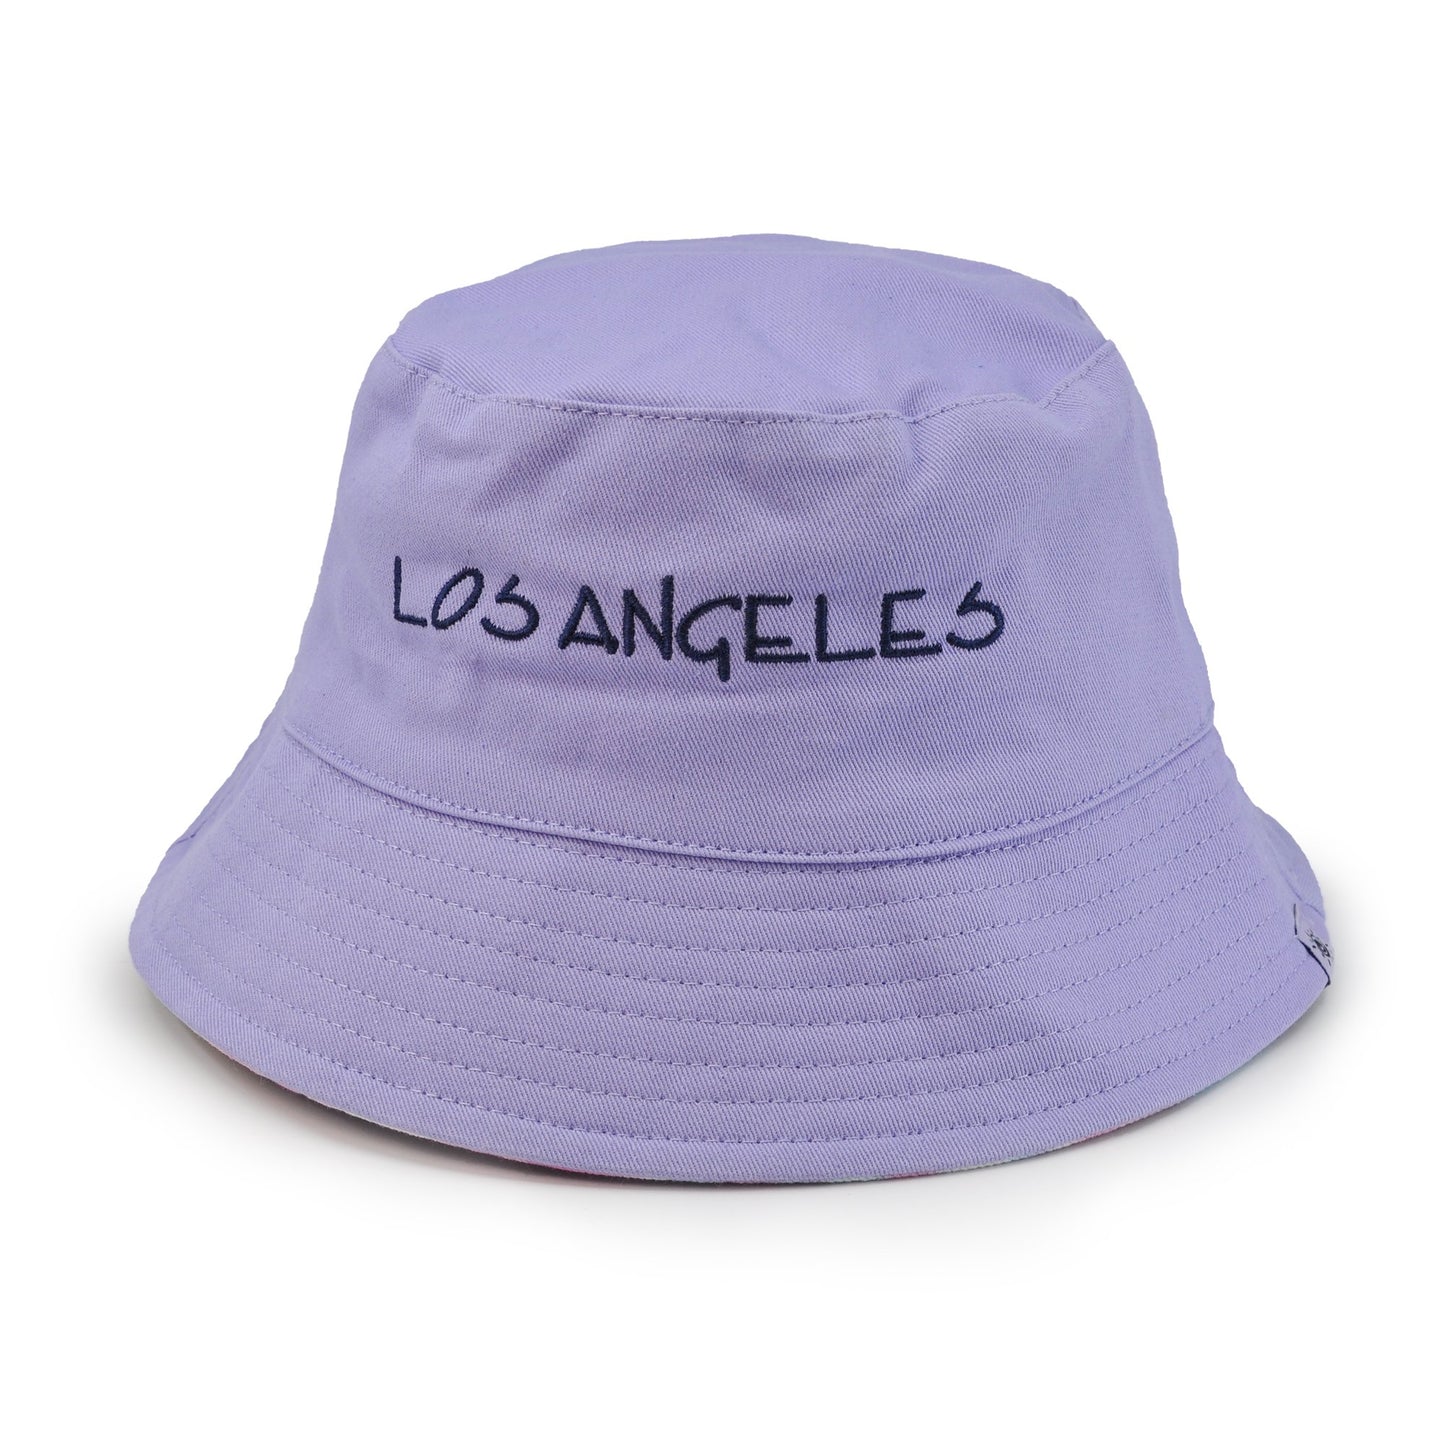 Reversible Your Beach City Unisex 100% Cotton Packable Summer Travel Bucket Beach Sun Hat Outdoor Cap. (Tie Dye Rainbow/Purple)